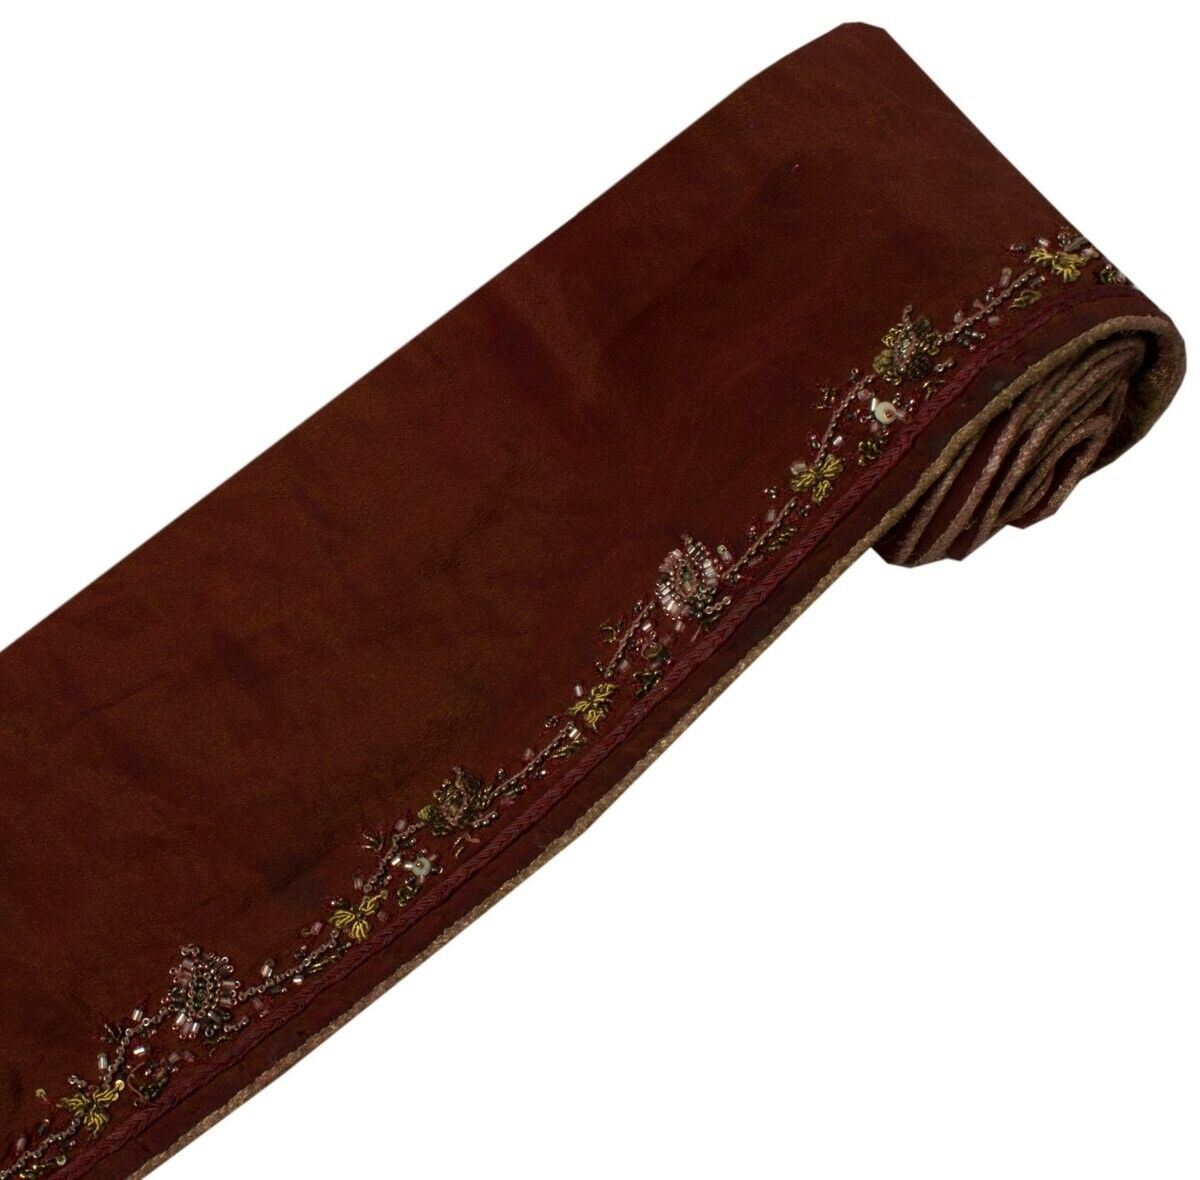 Vintage Sari Border Indian Craft Sewing Trim Hand Beaded Edging Ribbon Lace